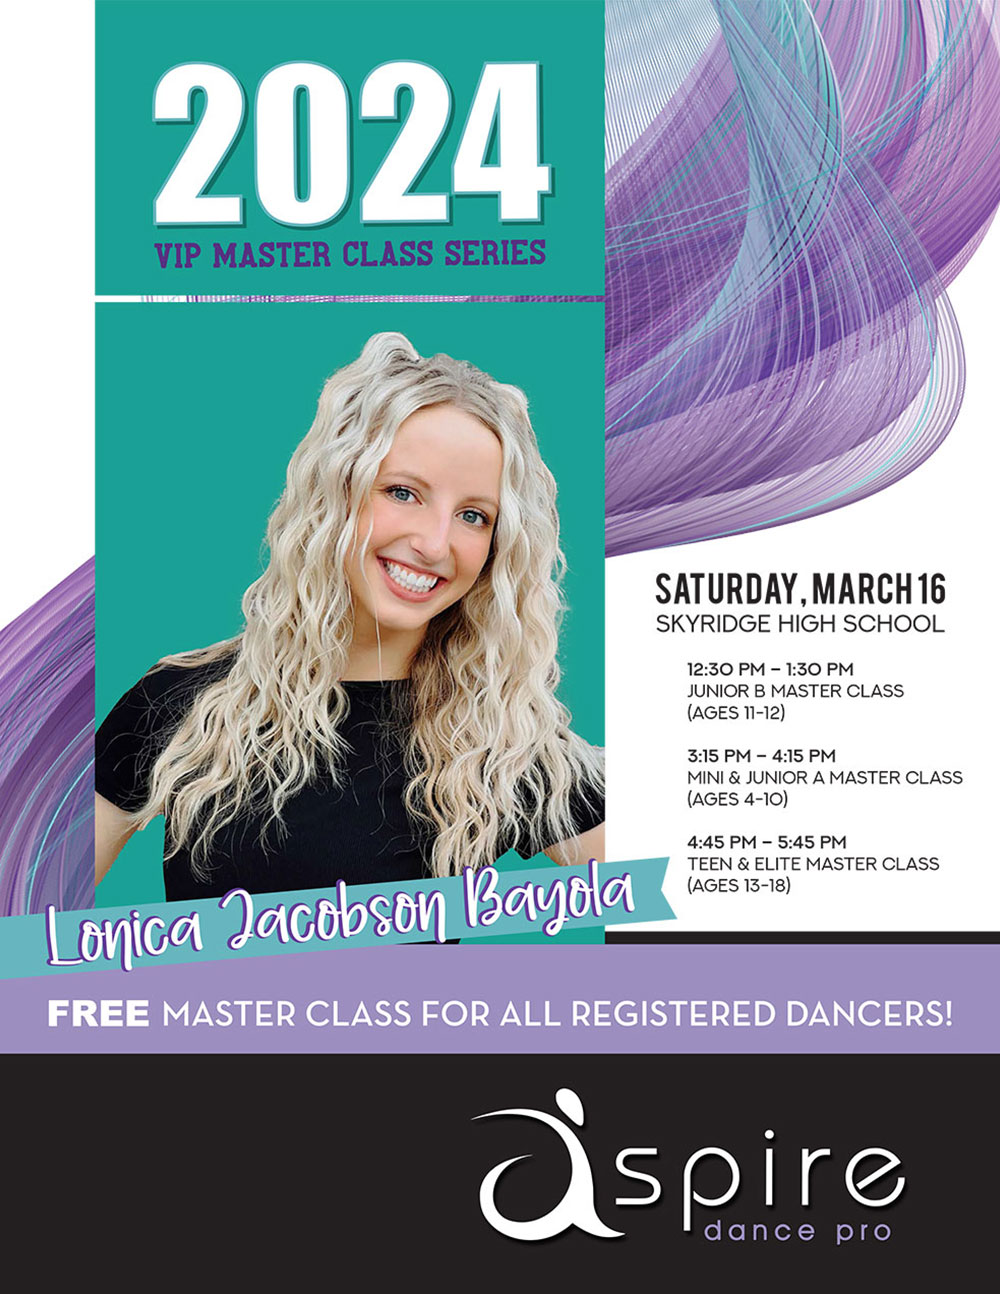 Lonica Jacobsen Bayola - Aspire 2024 VIP Master Class Series